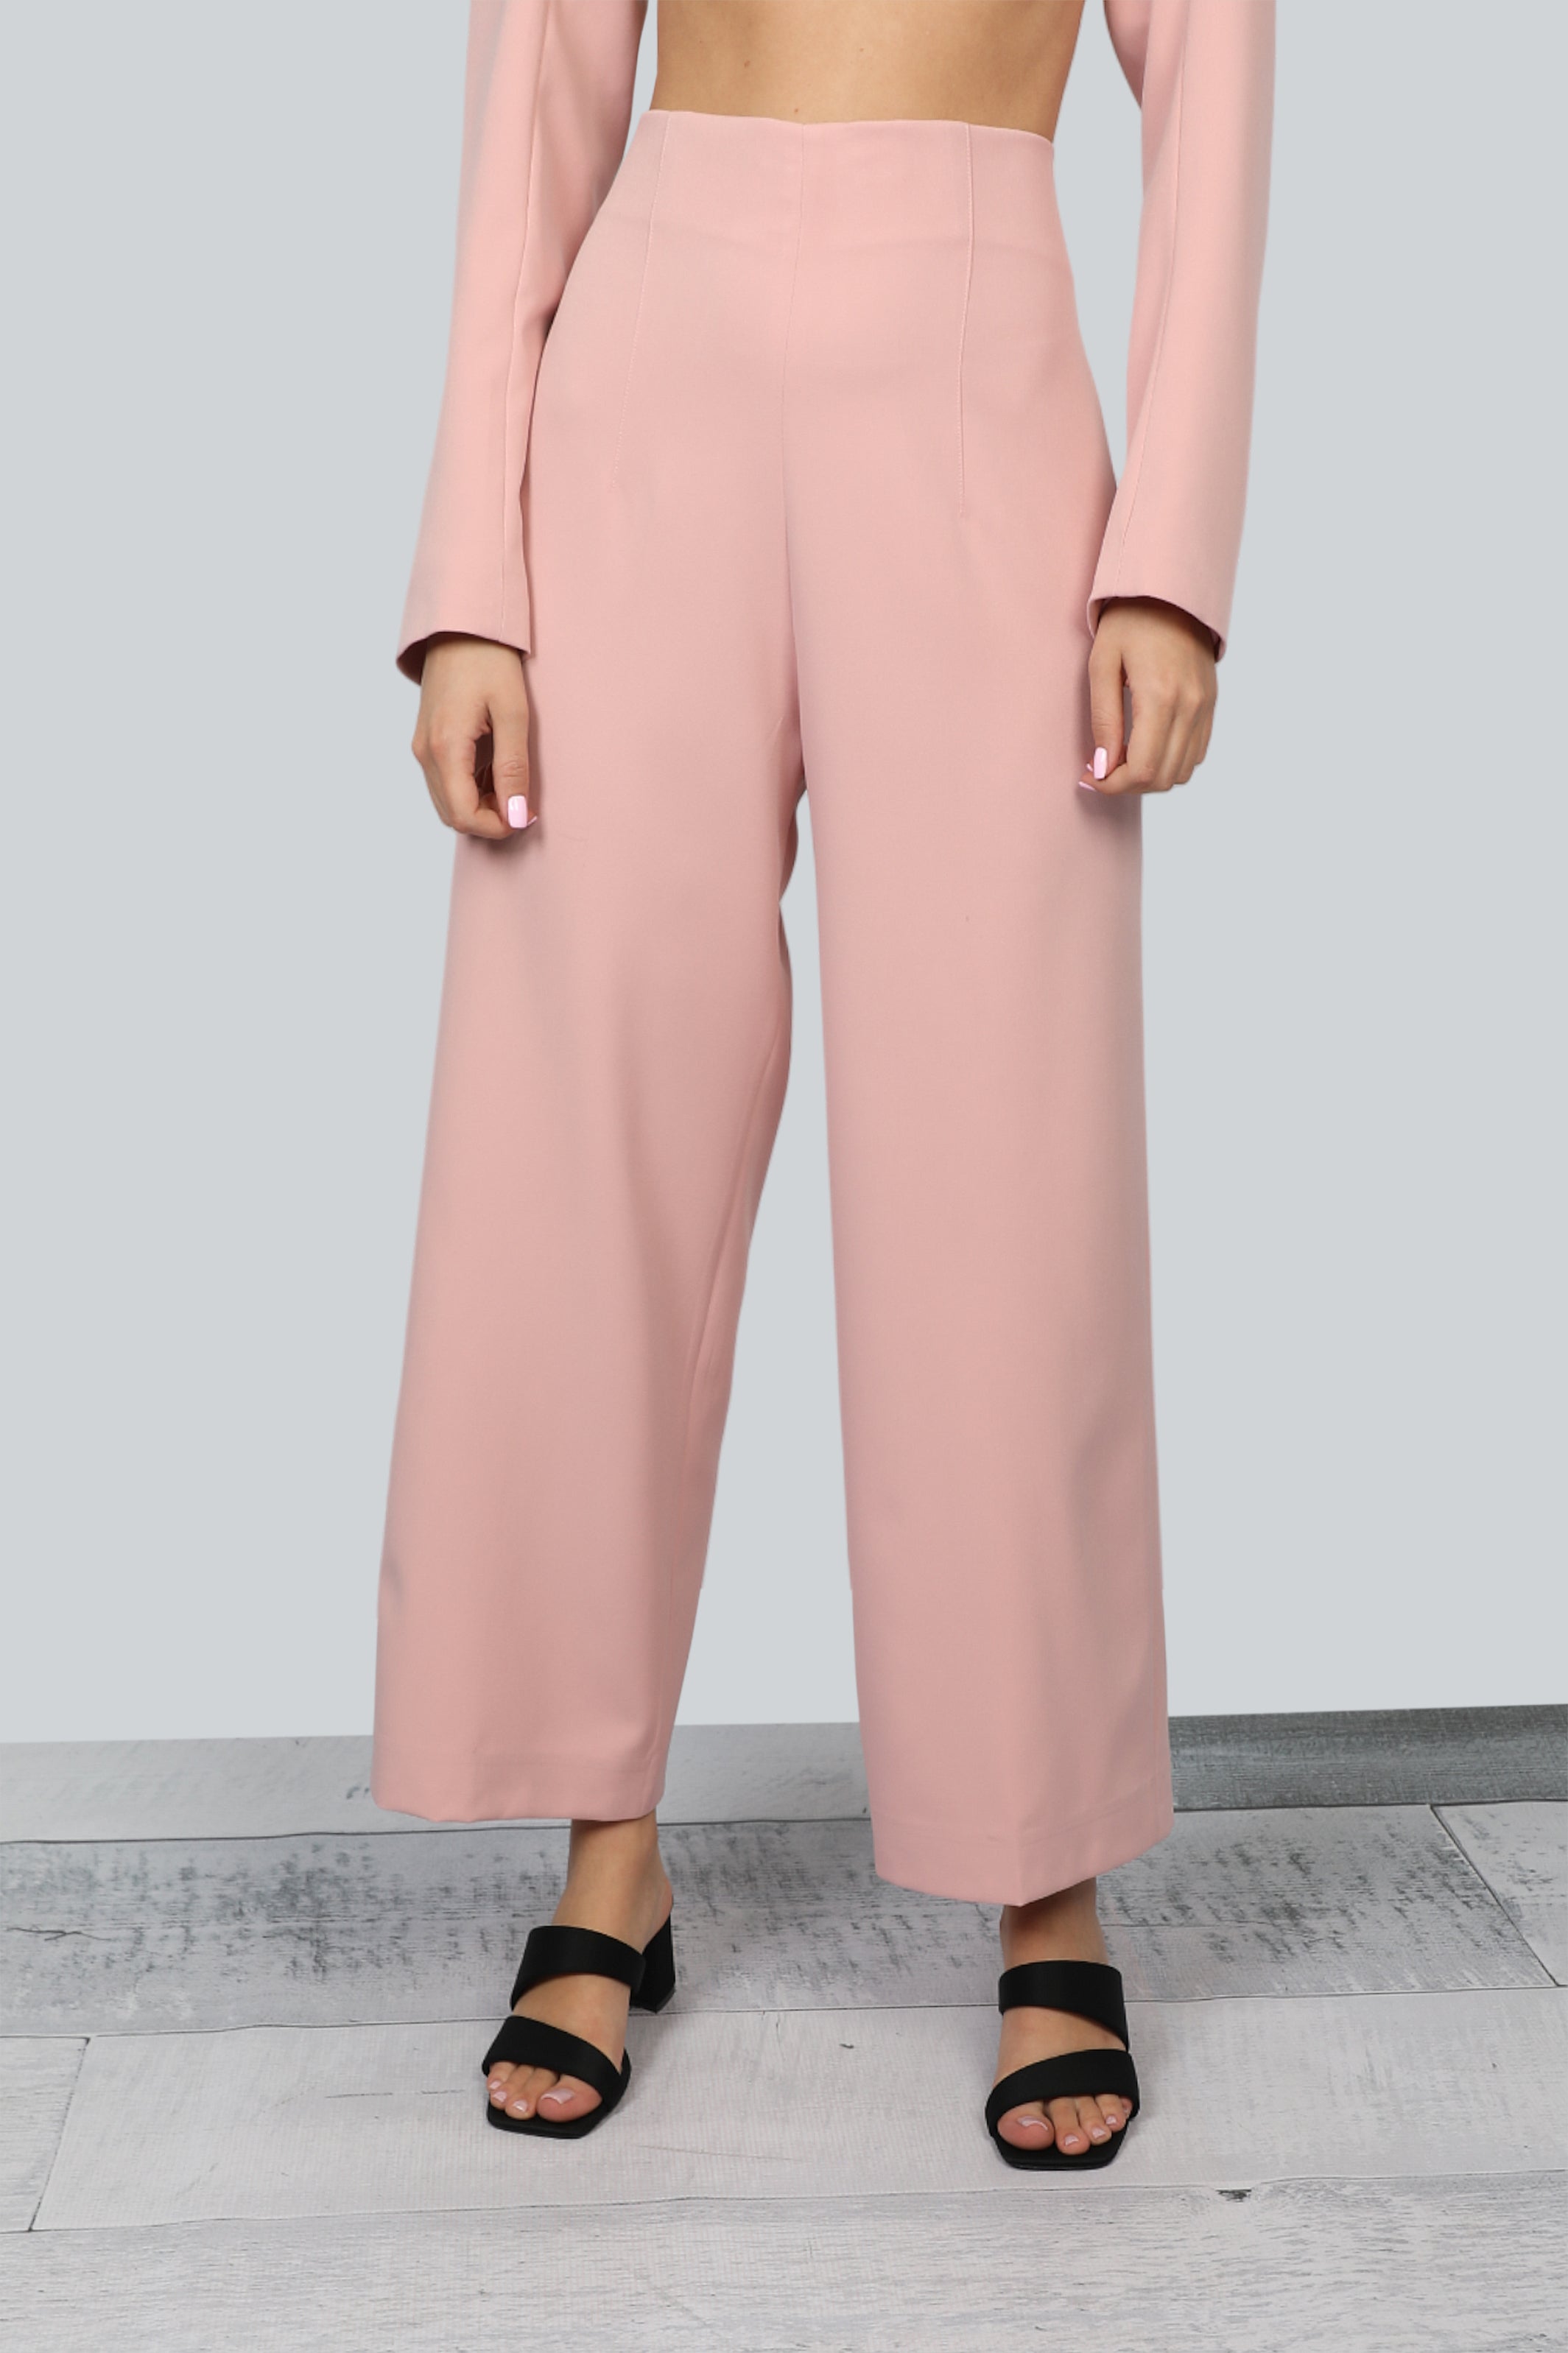 Classy Pink High Waist Pants